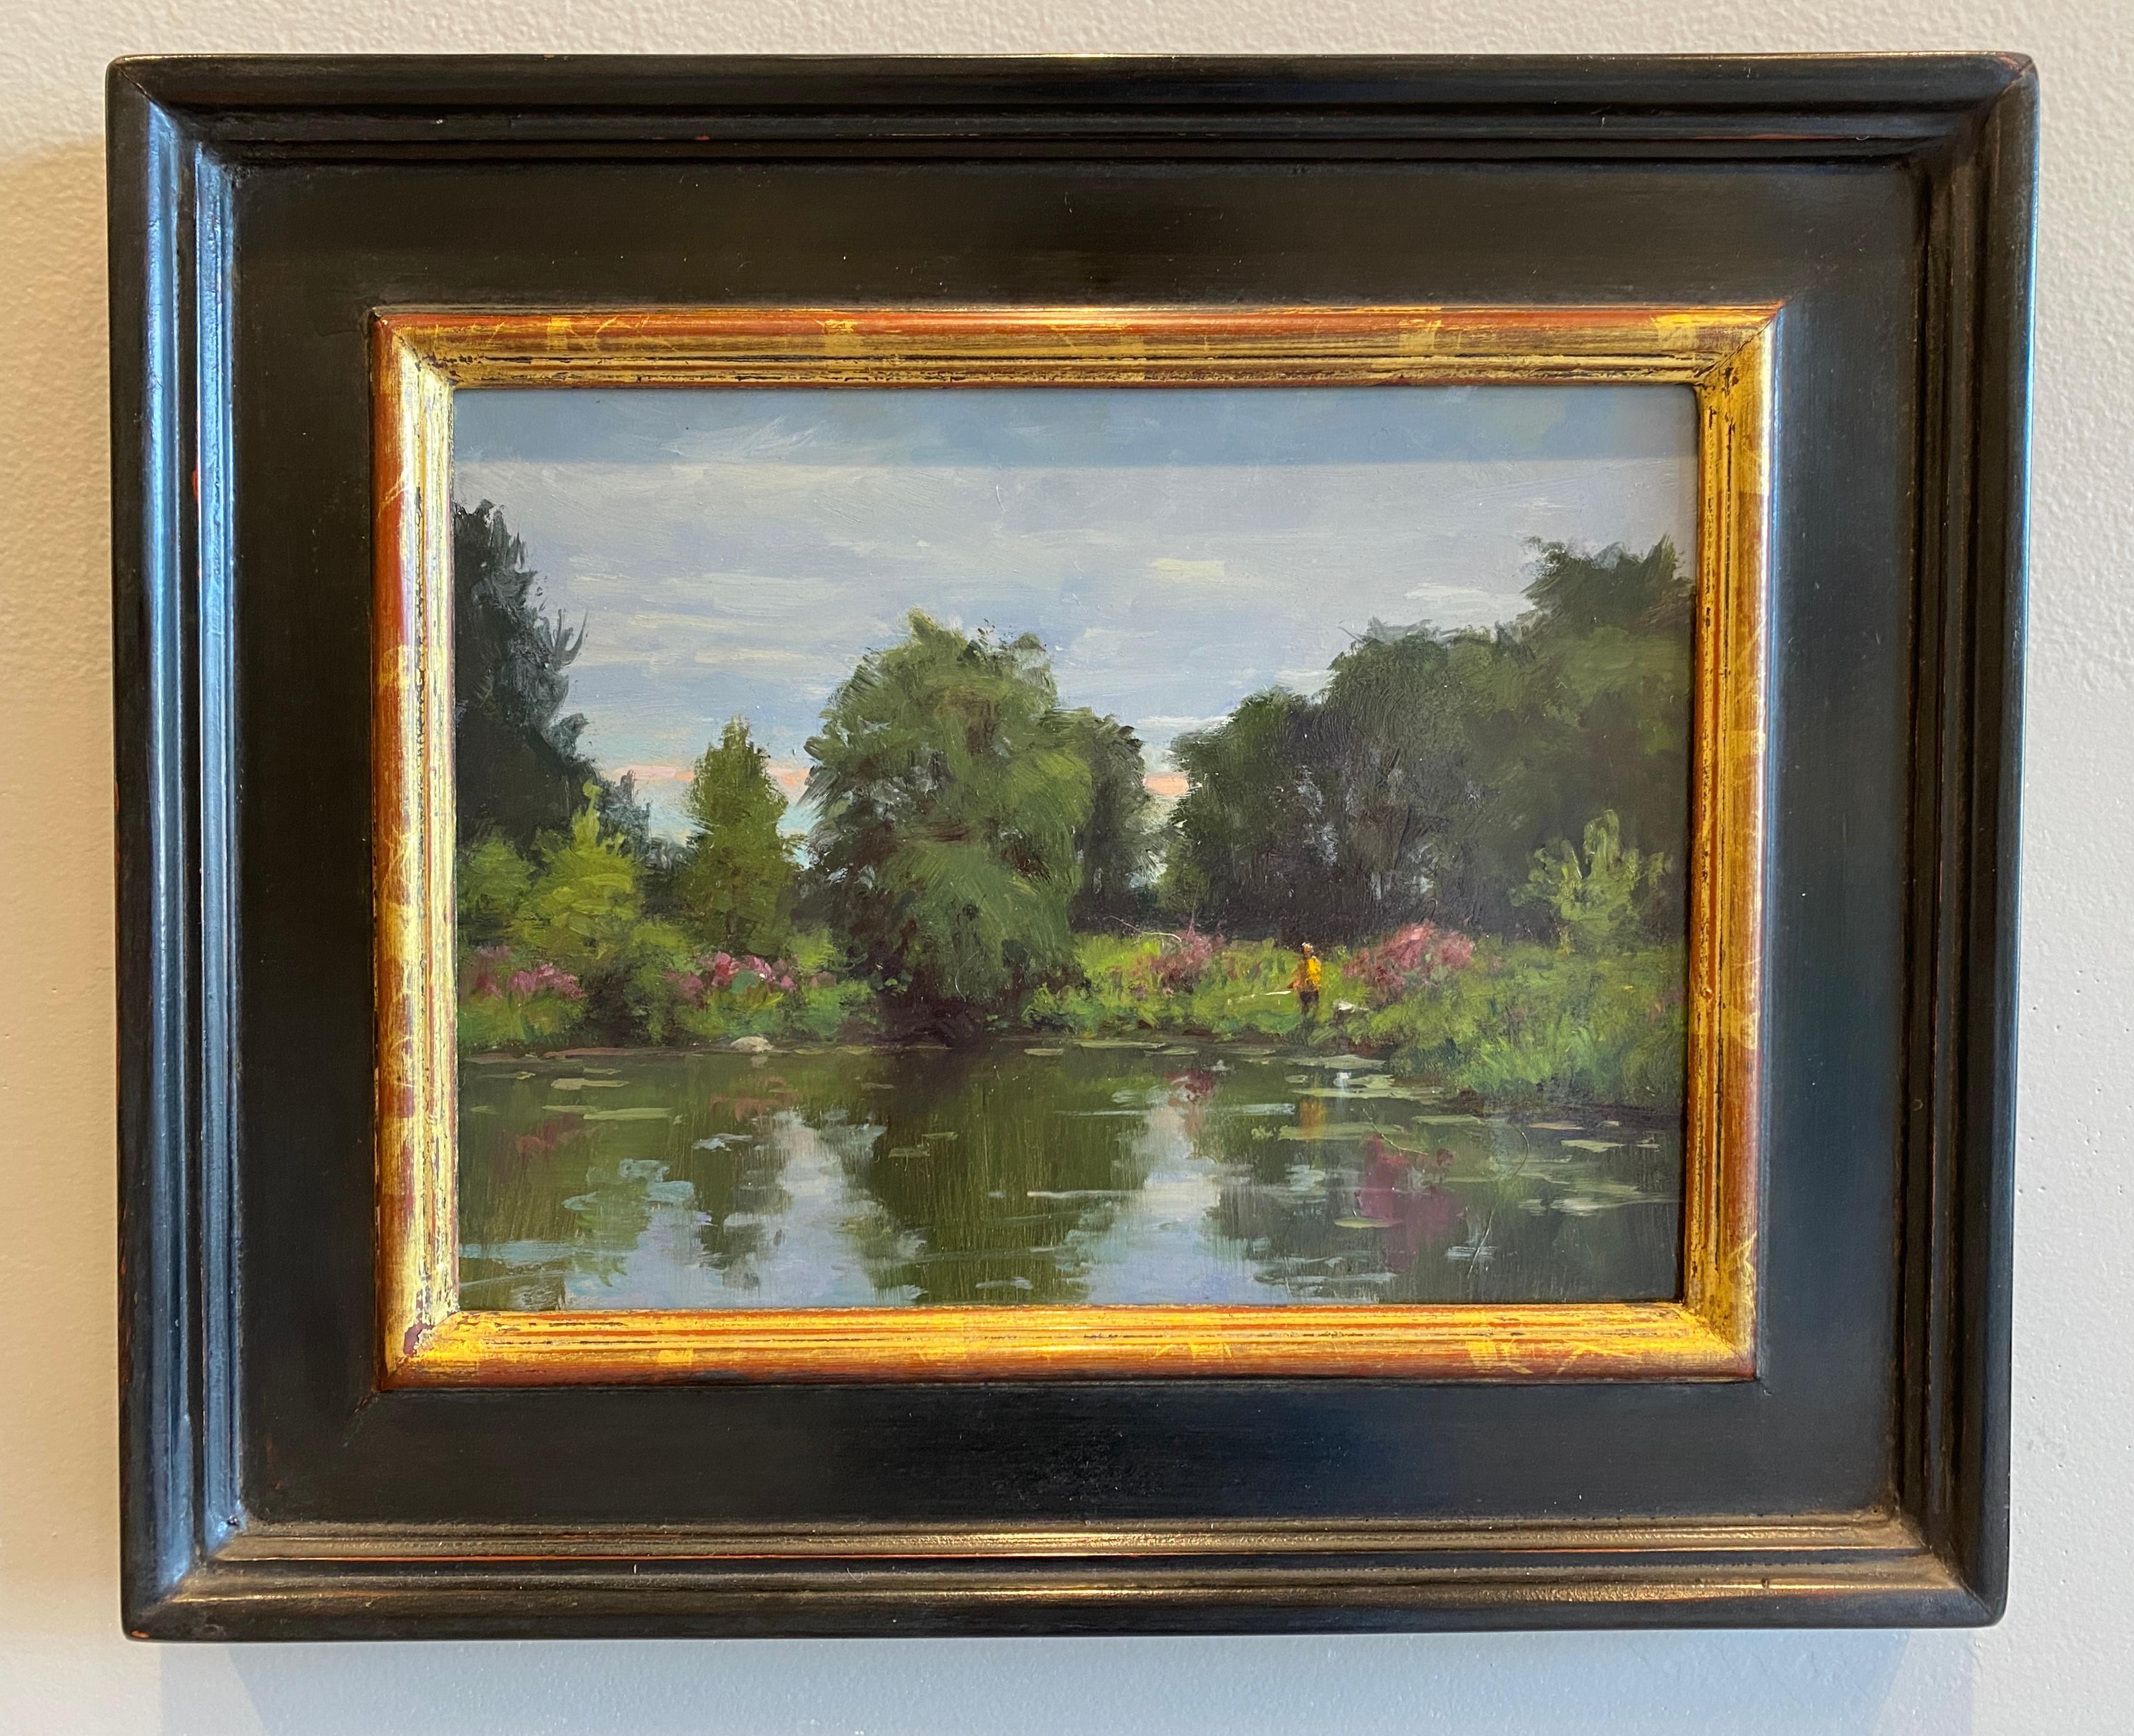 Bewölkter Tag am Teich – Painting von Carl Bretzke